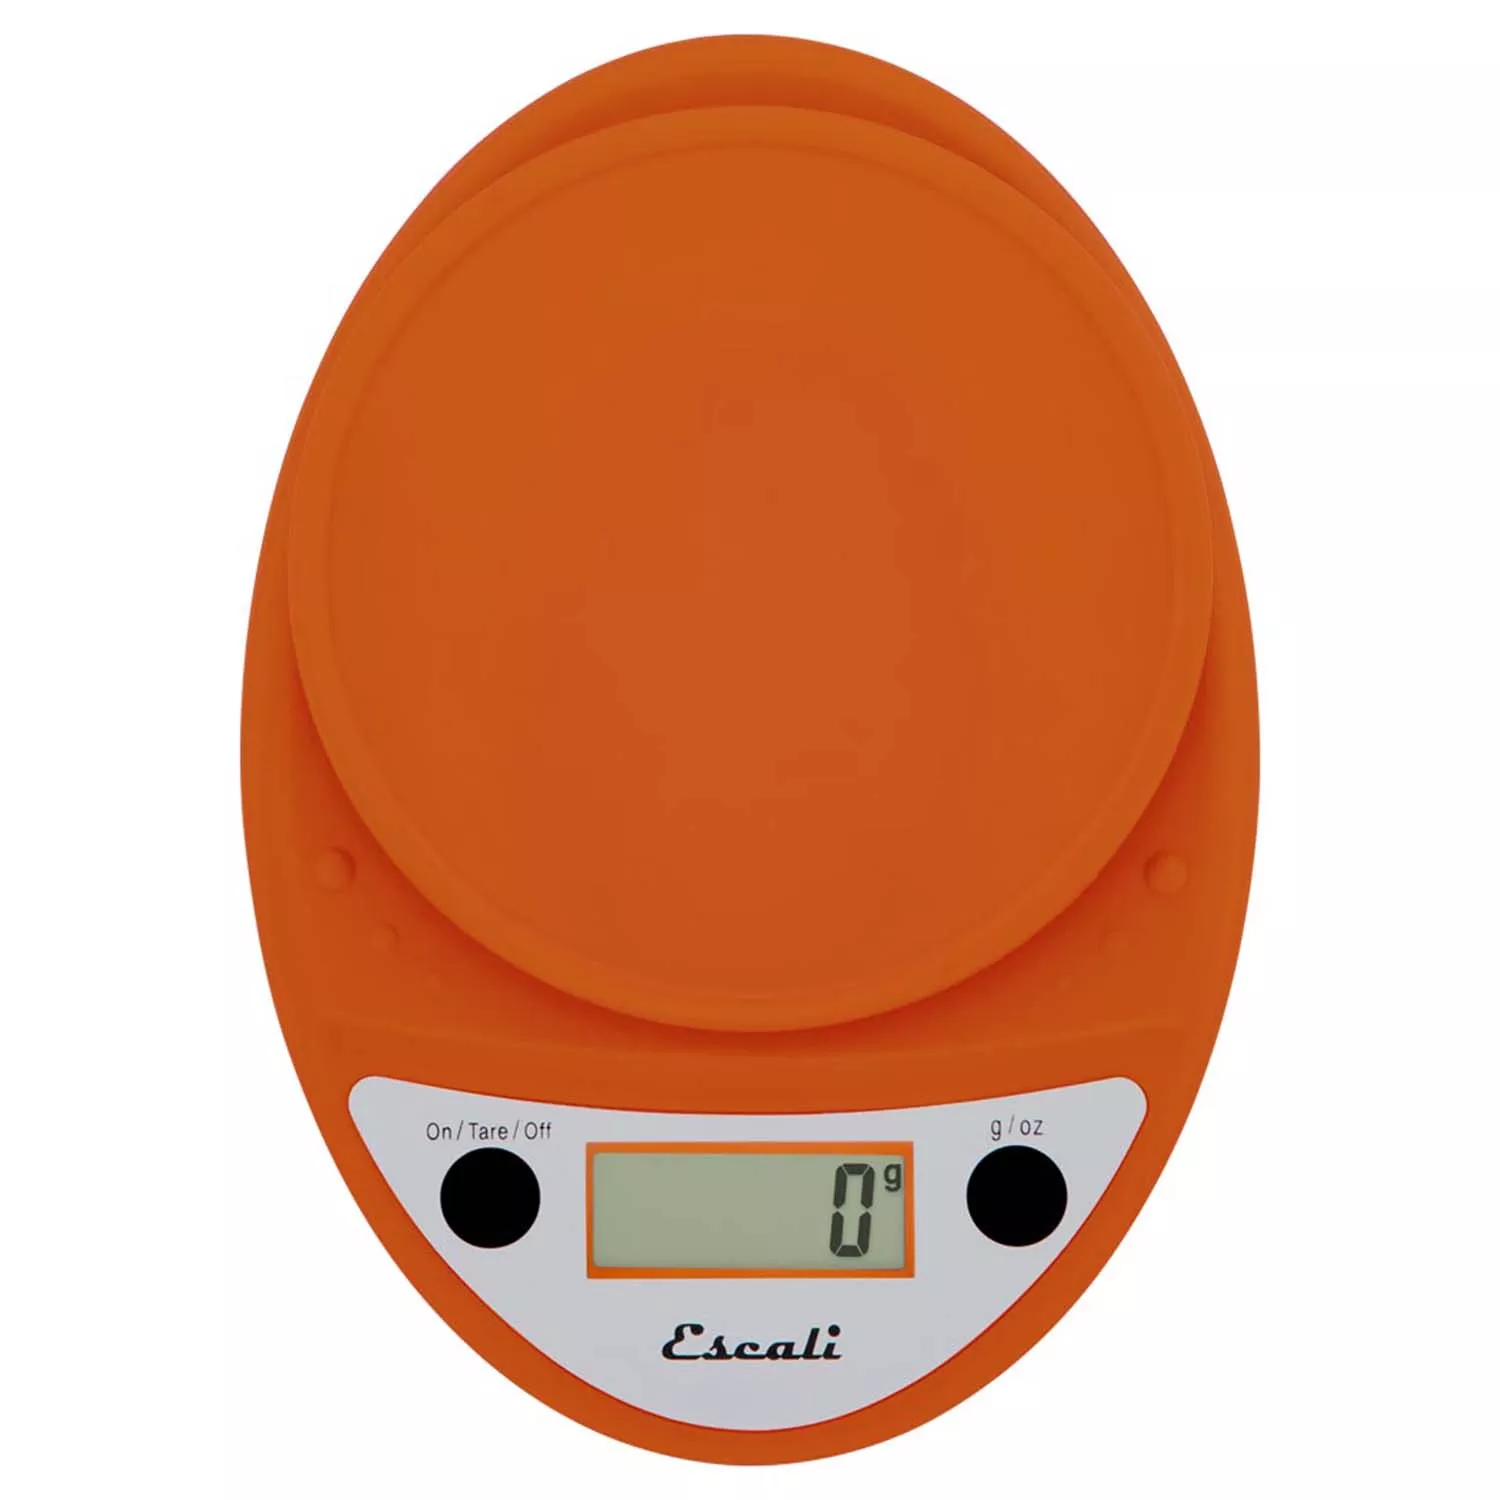 Escali Primo Digital Food Scale - Pumpkin Orange